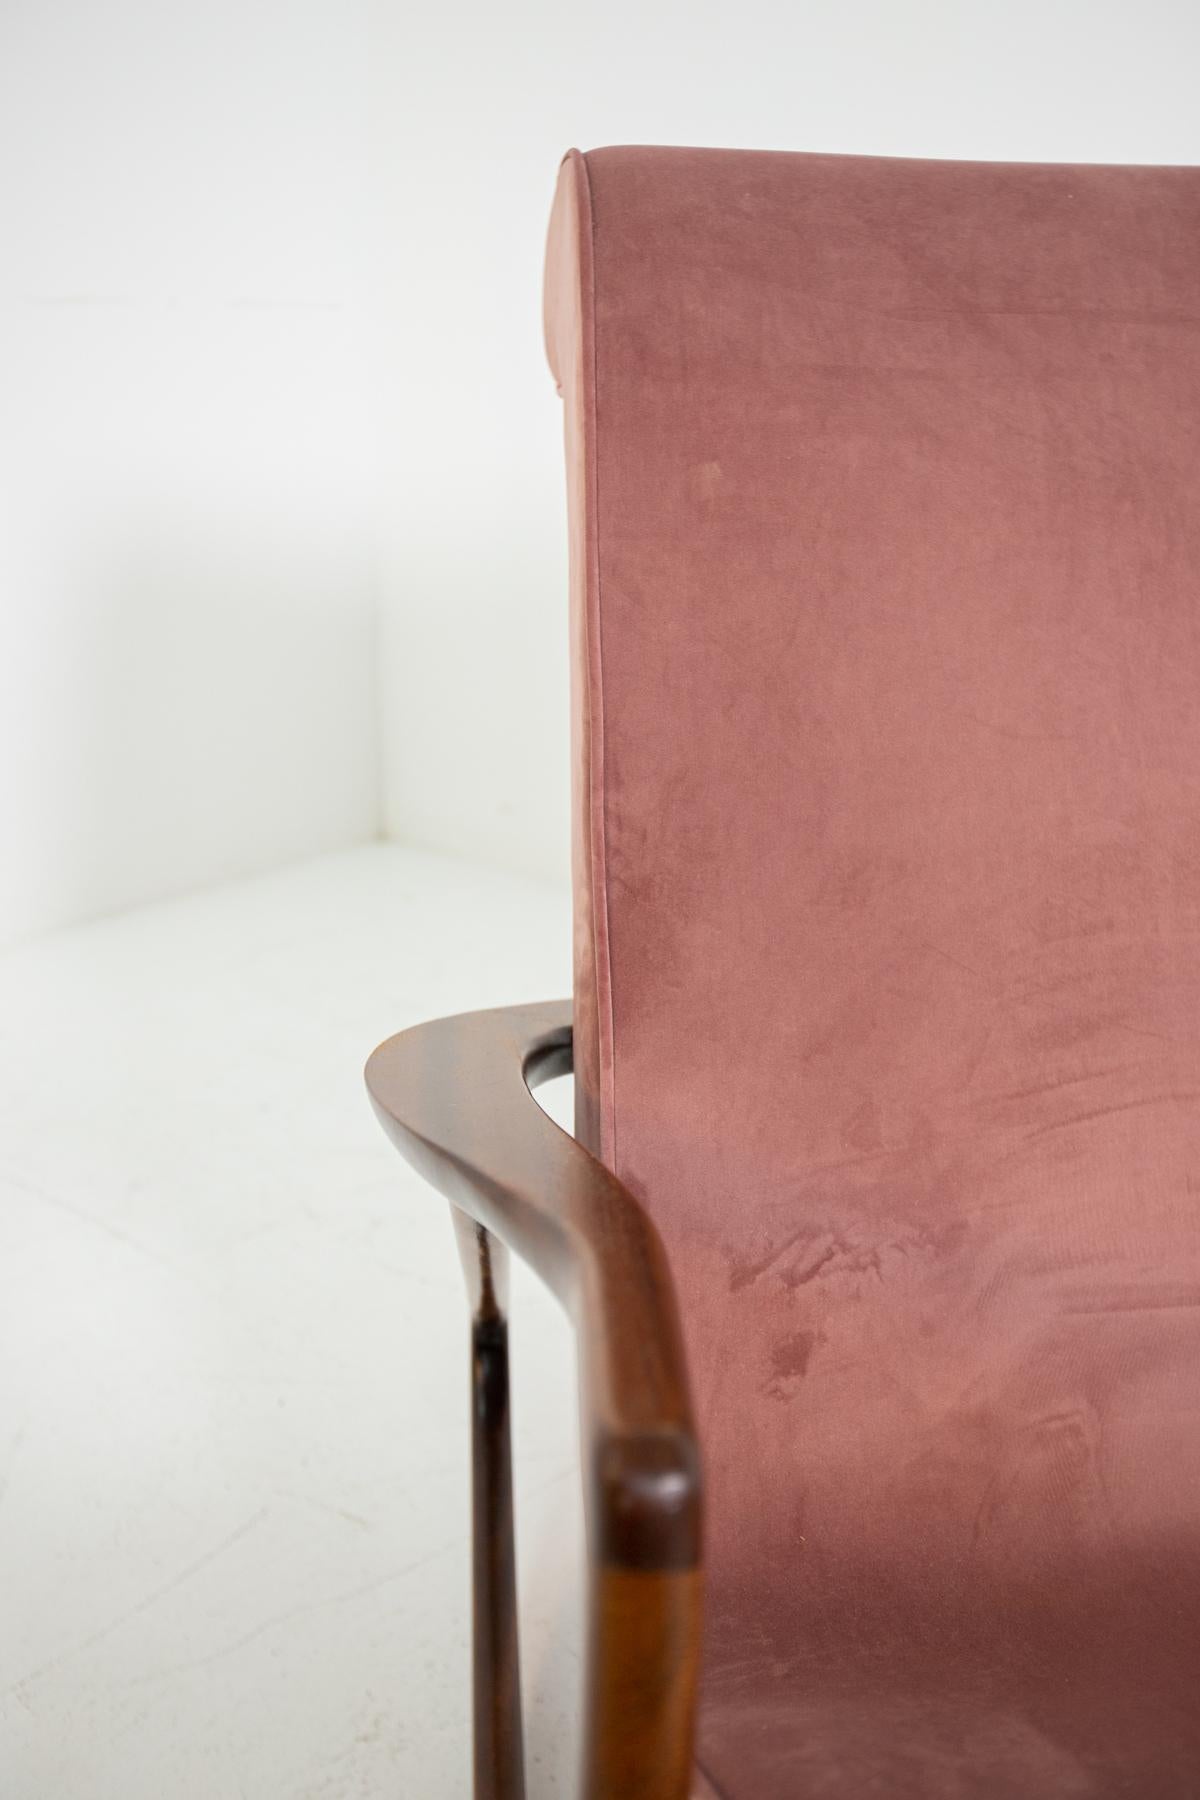 hot pink rocking chair